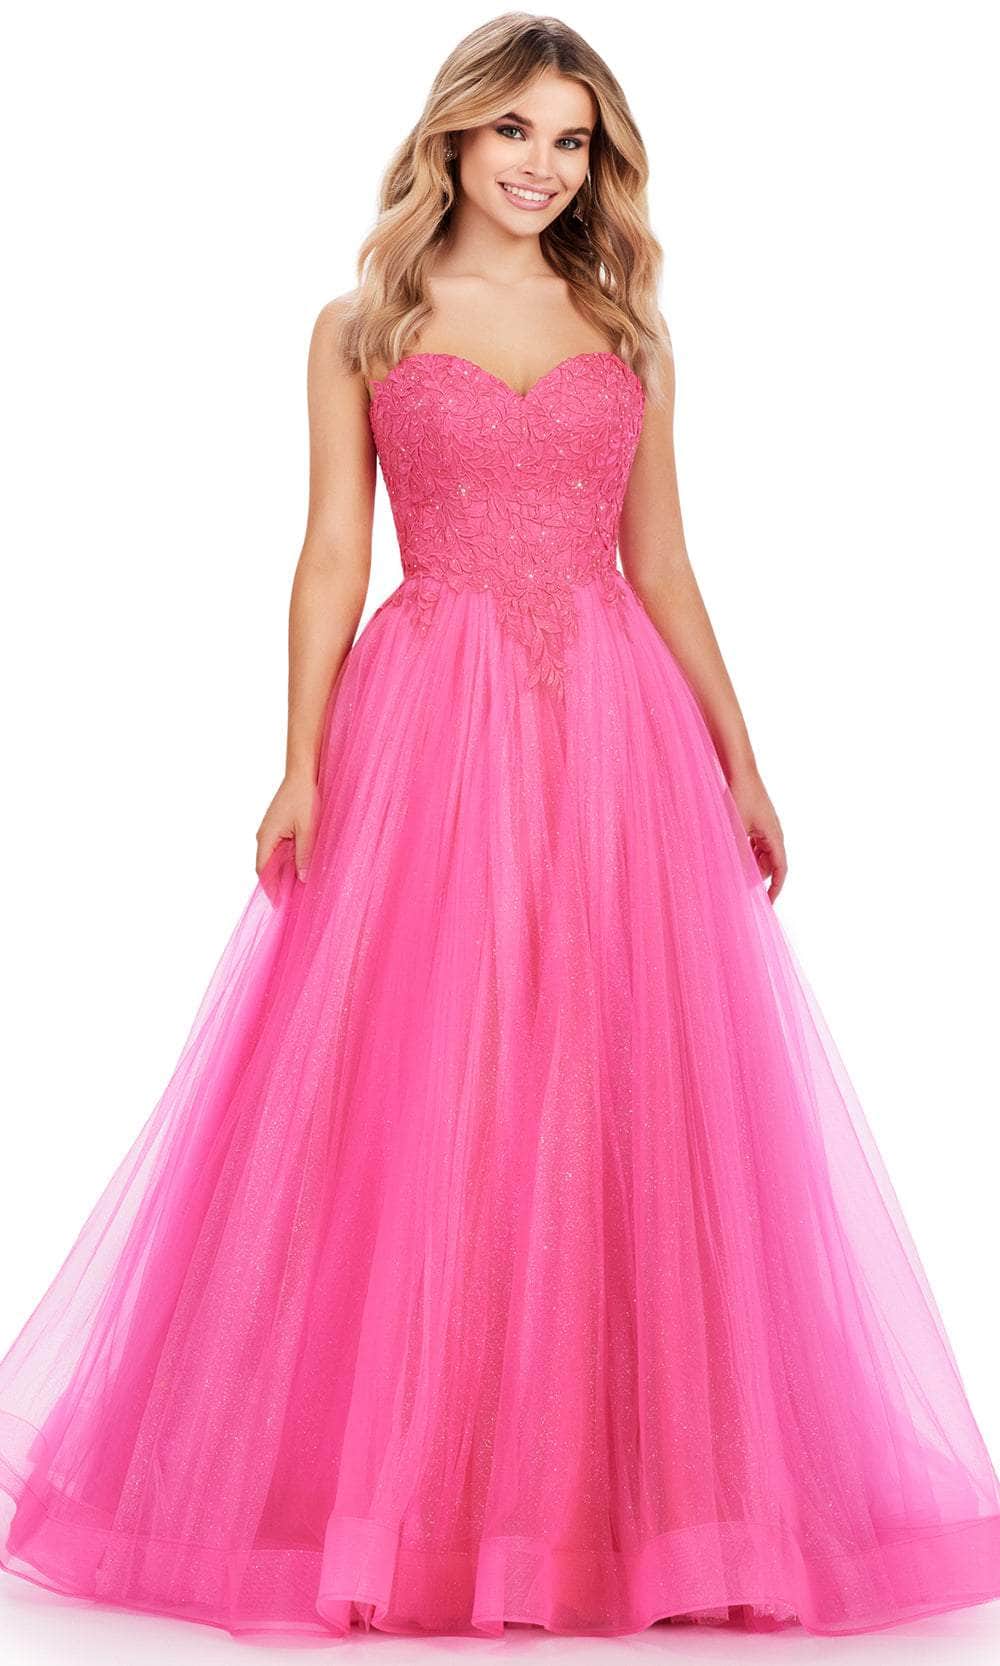 Ashley Lauren 11518 - Sweetheart Applique Prom Dress 00 /  Hot Pink